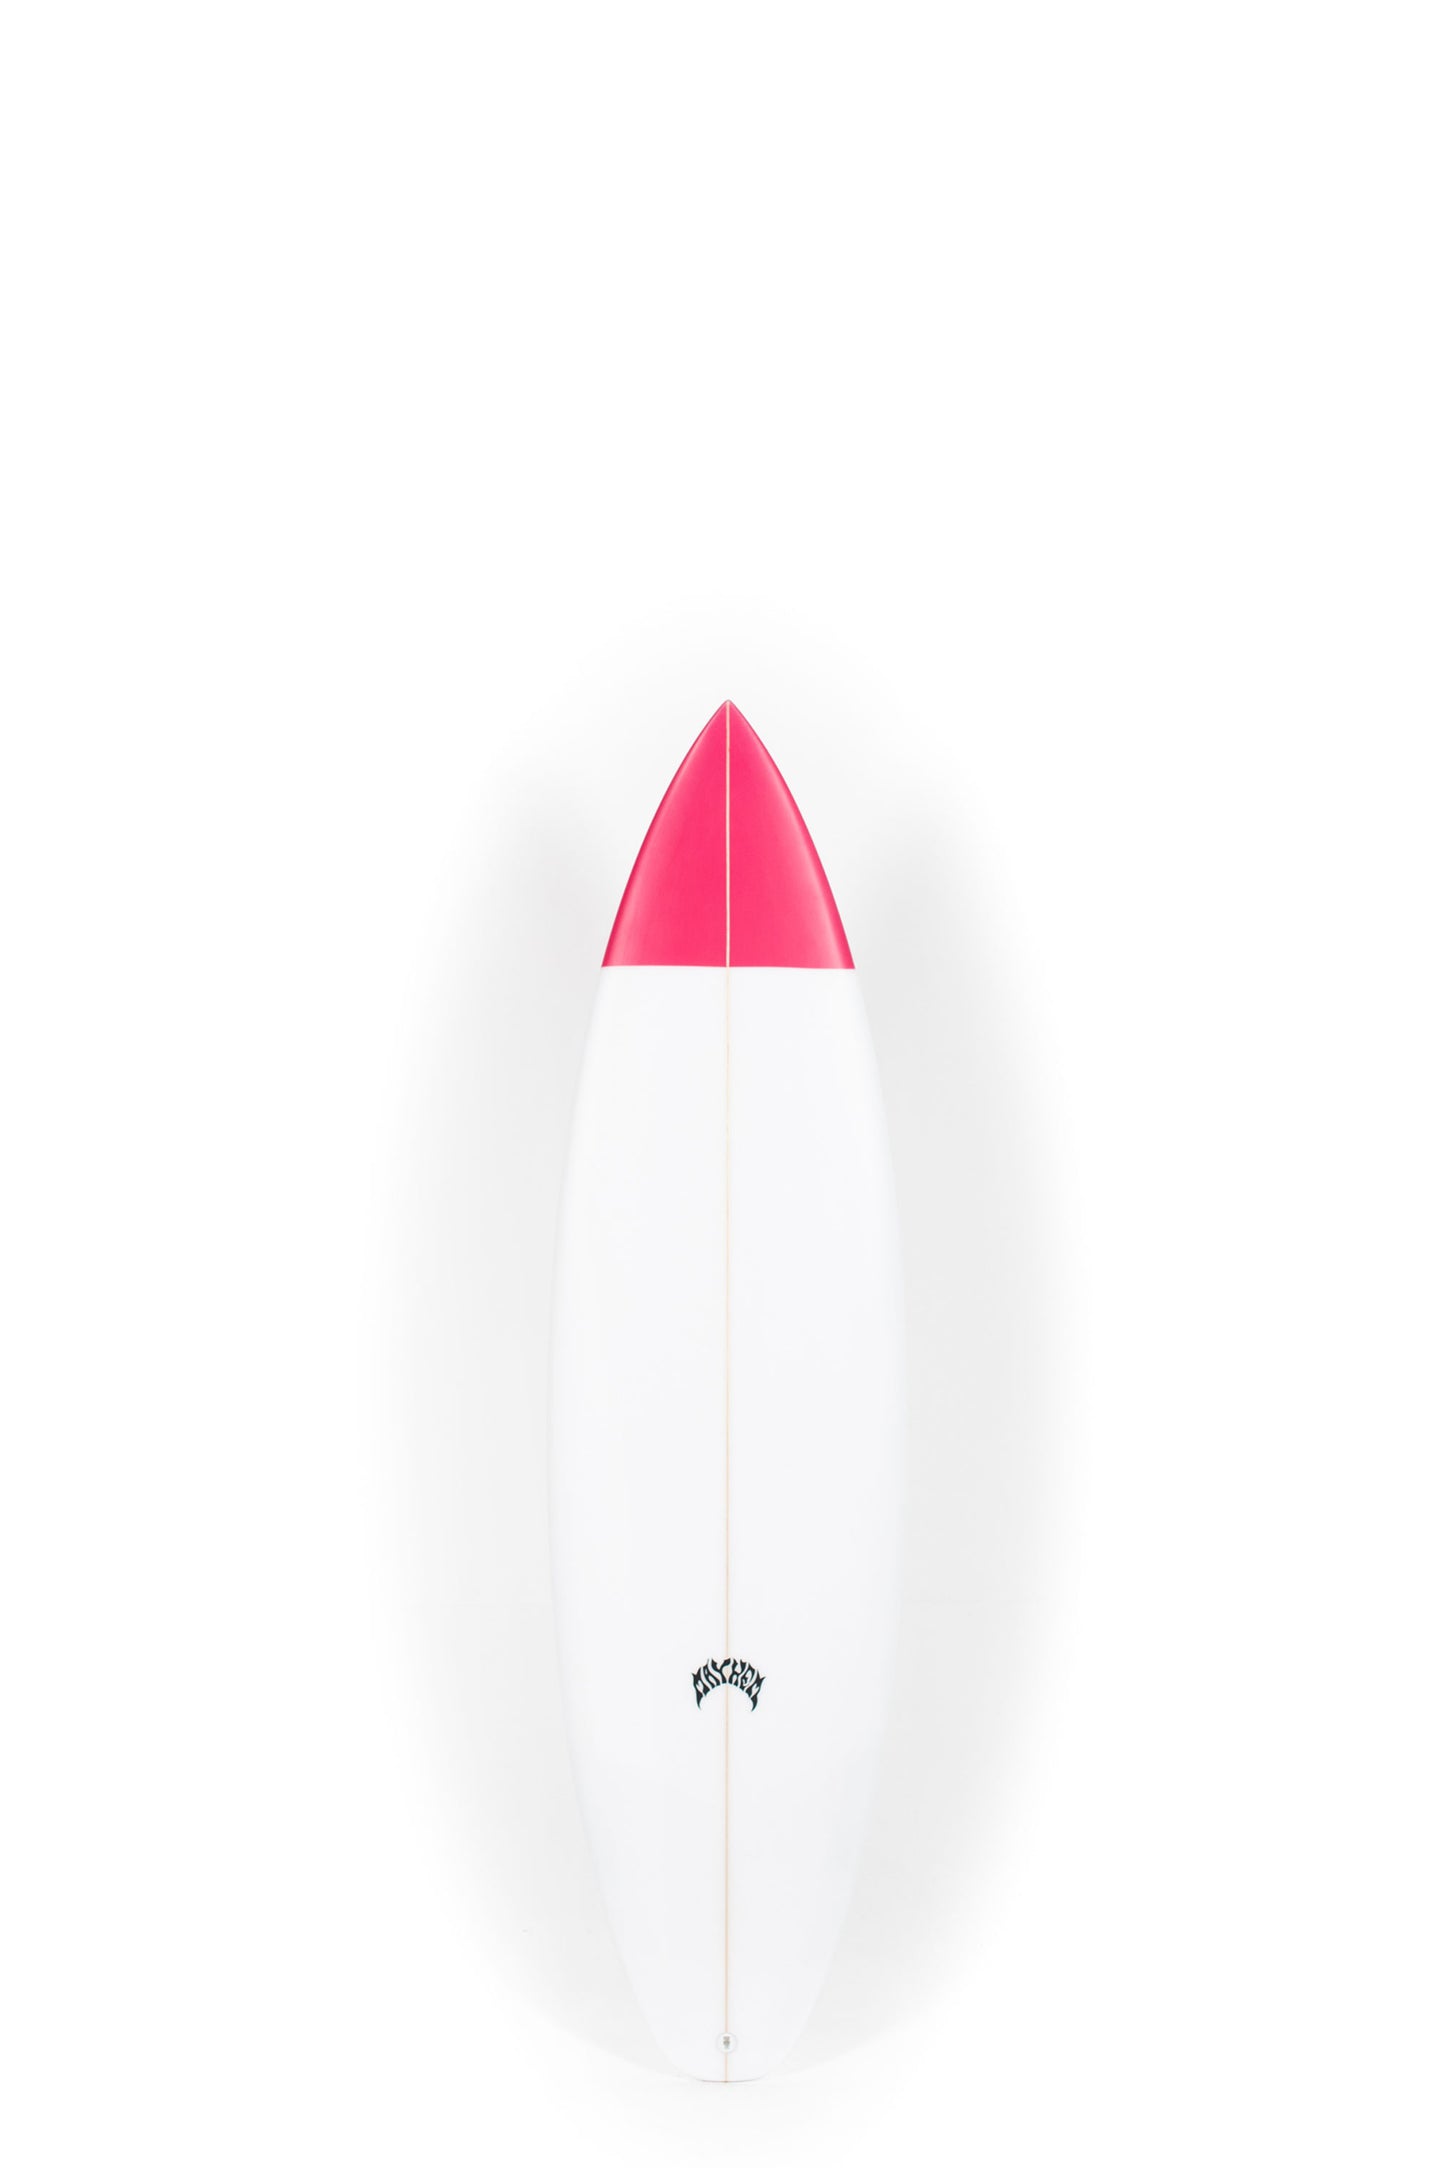 Pukas Surf Shop - Lost Surfboards - DRIVER 3.0 by Matt Biolos - 6'1" x 19 3/8 x 2 9/16 x 31,25L - MH15421